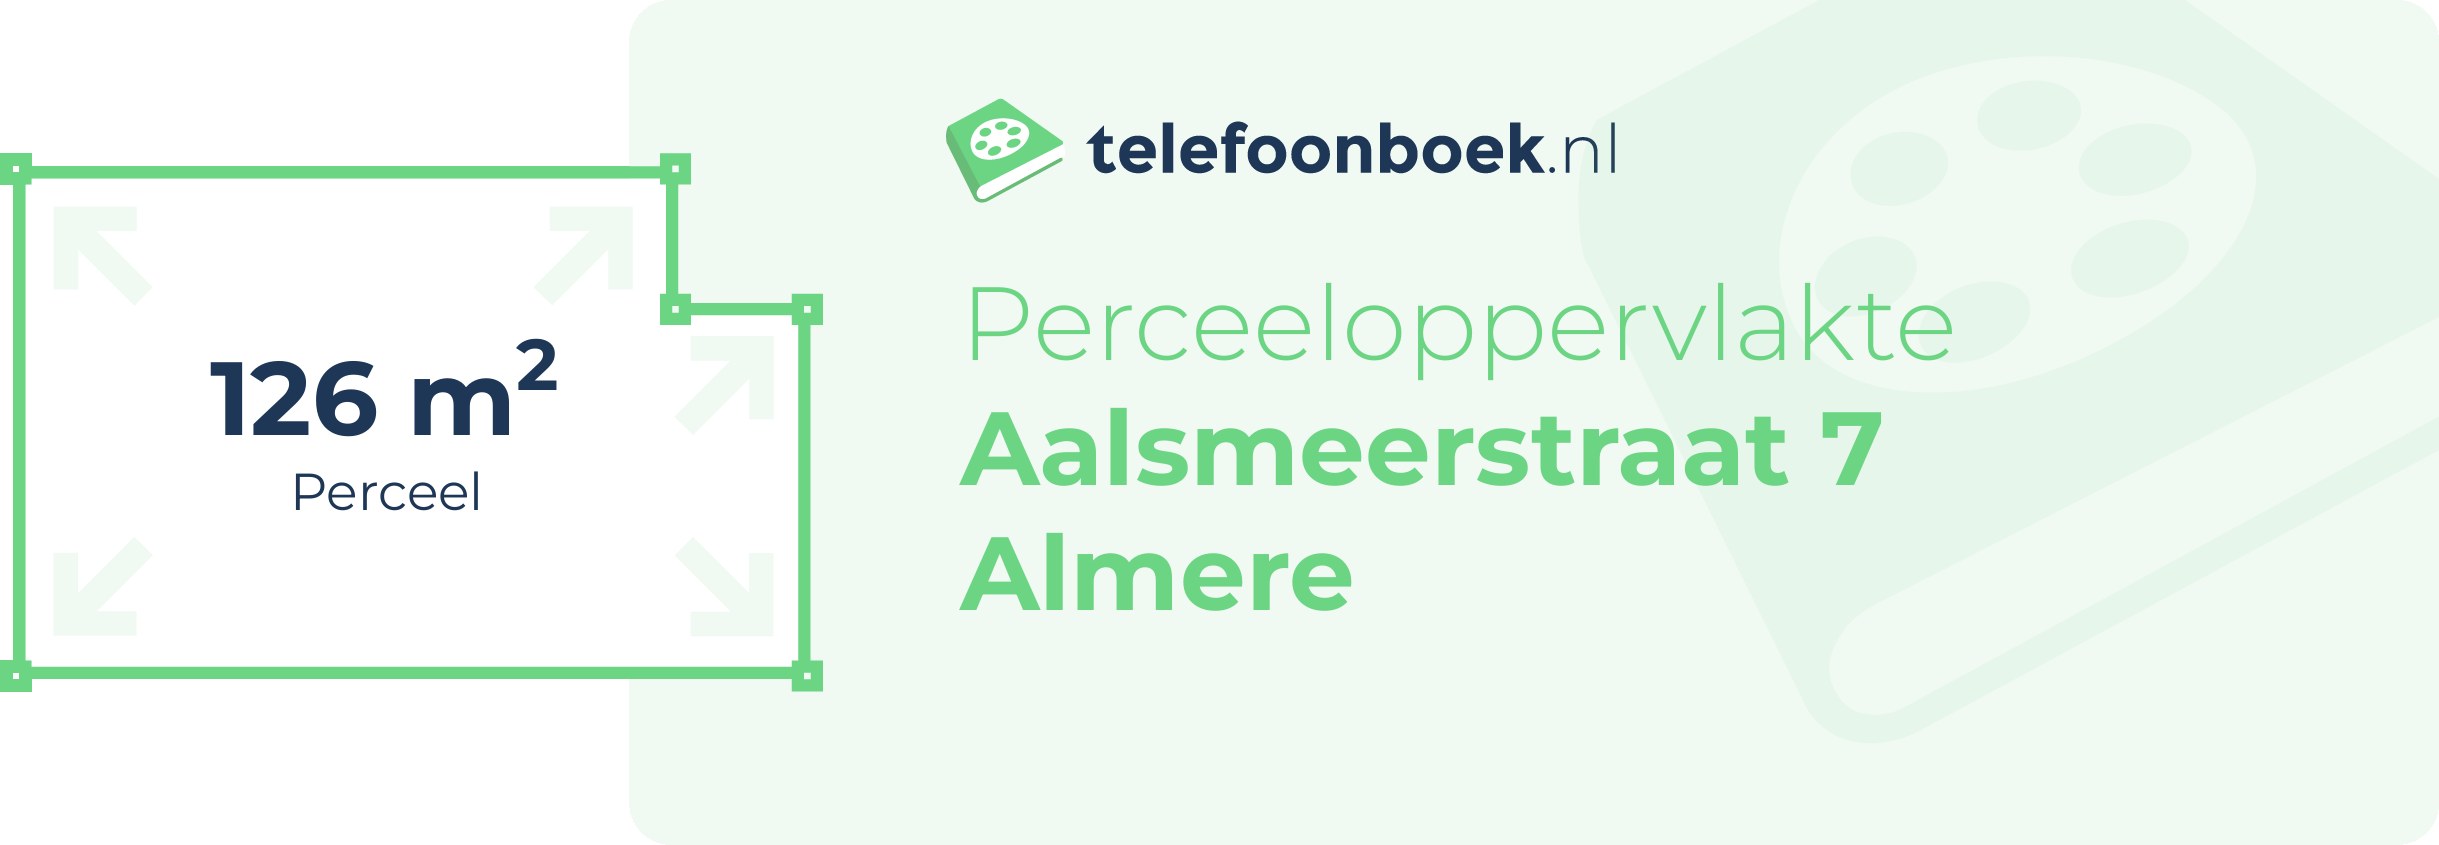 Perceeloppervlakte Aalsmeerstraat 7 Almere